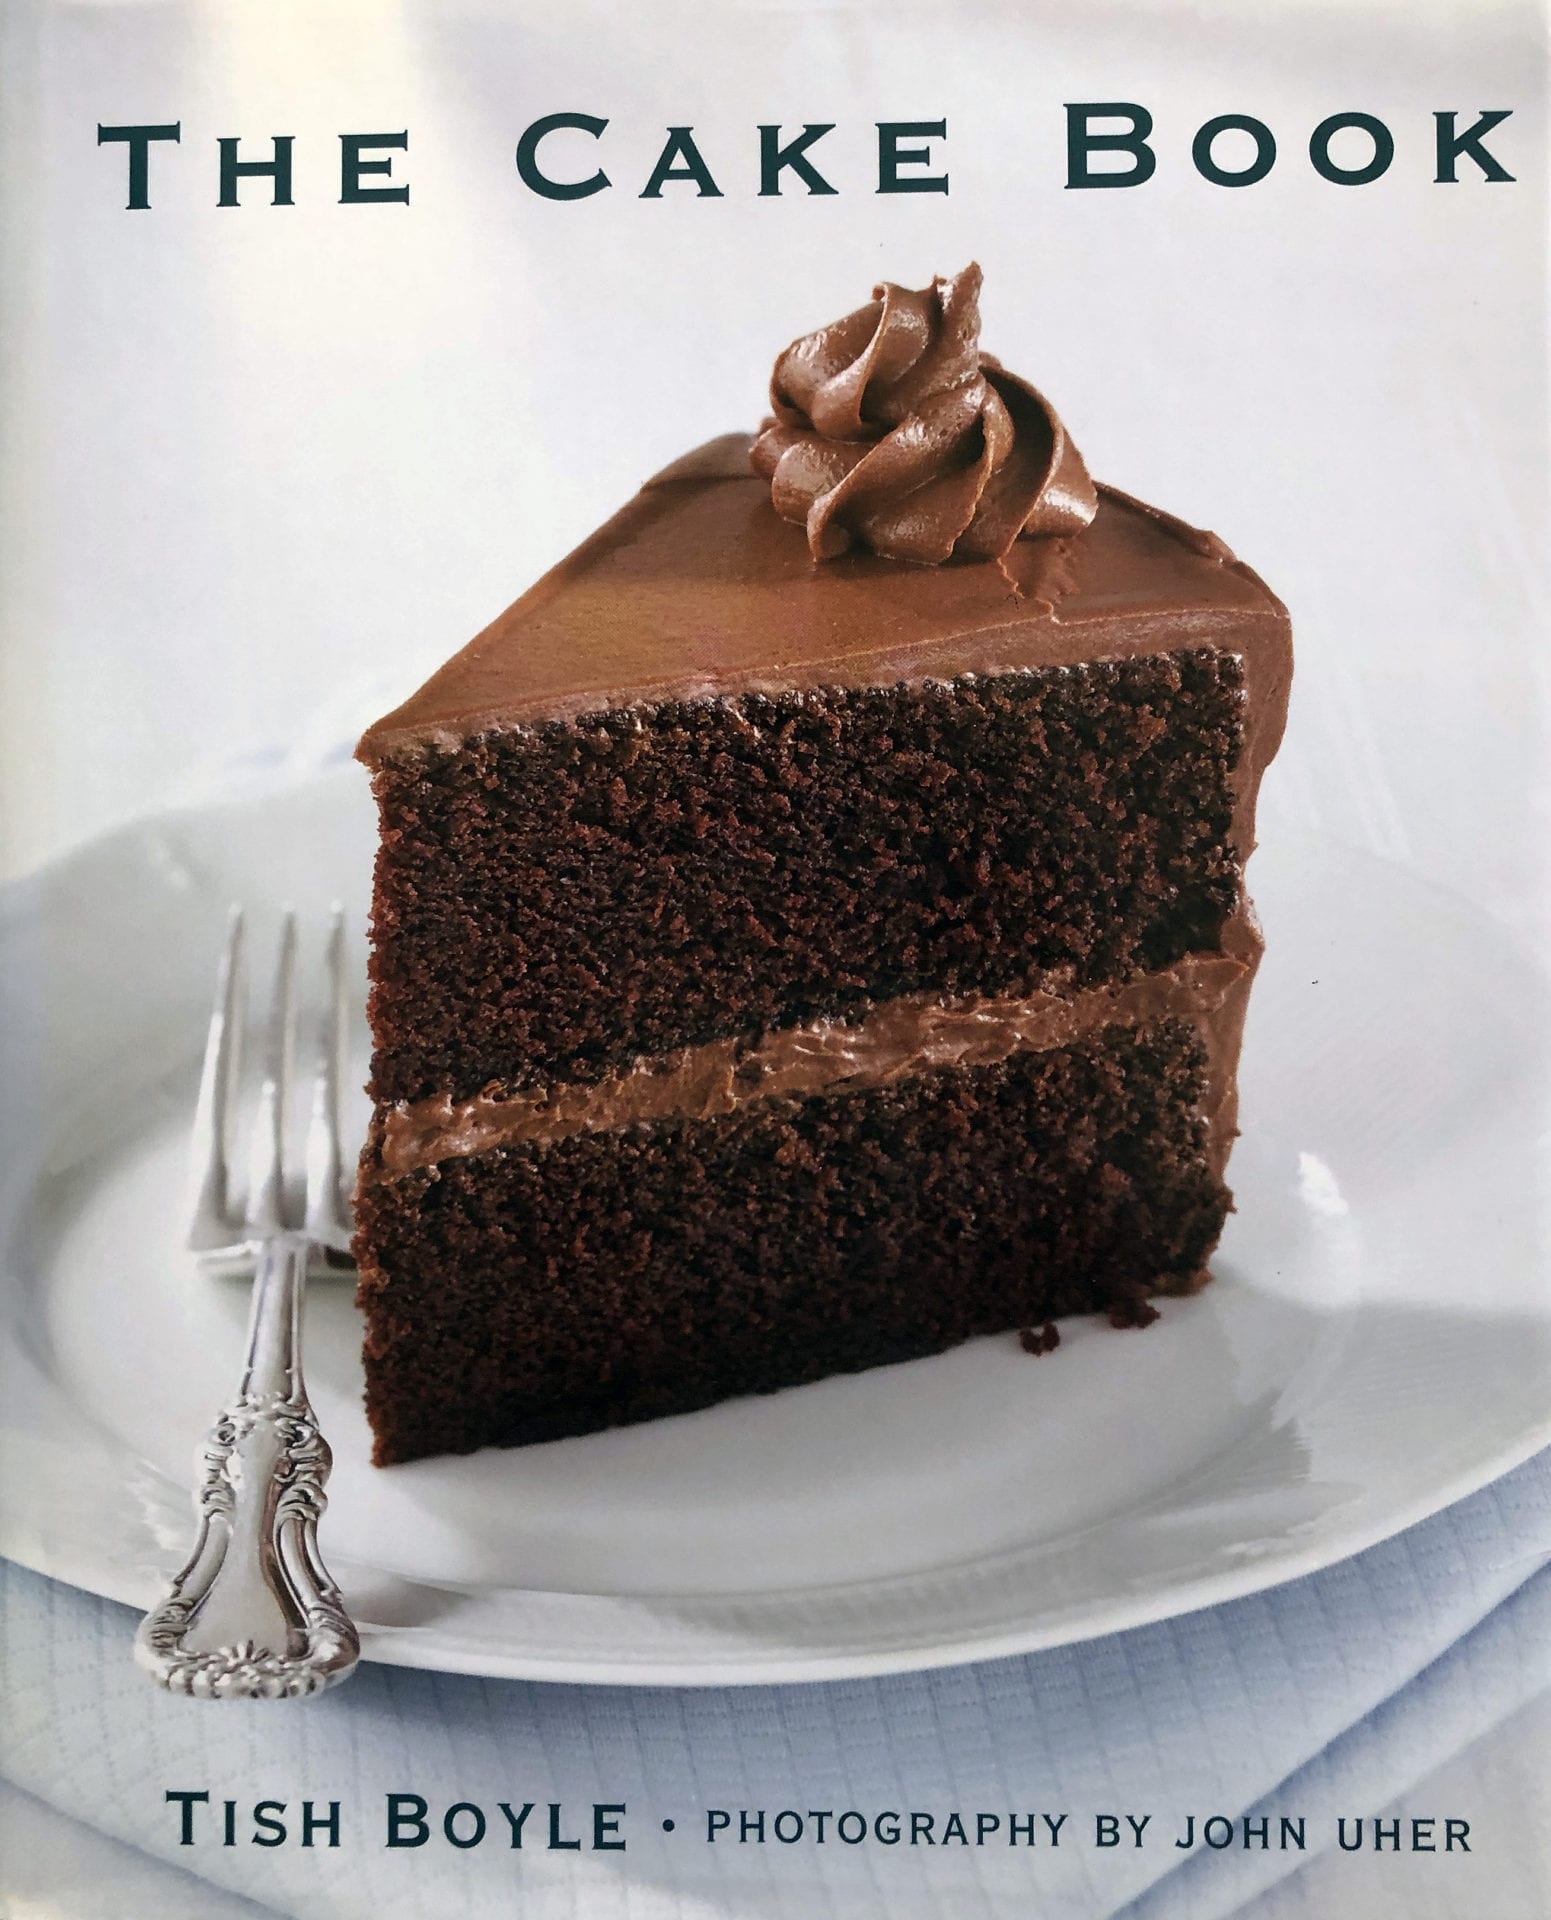 Cake book cover